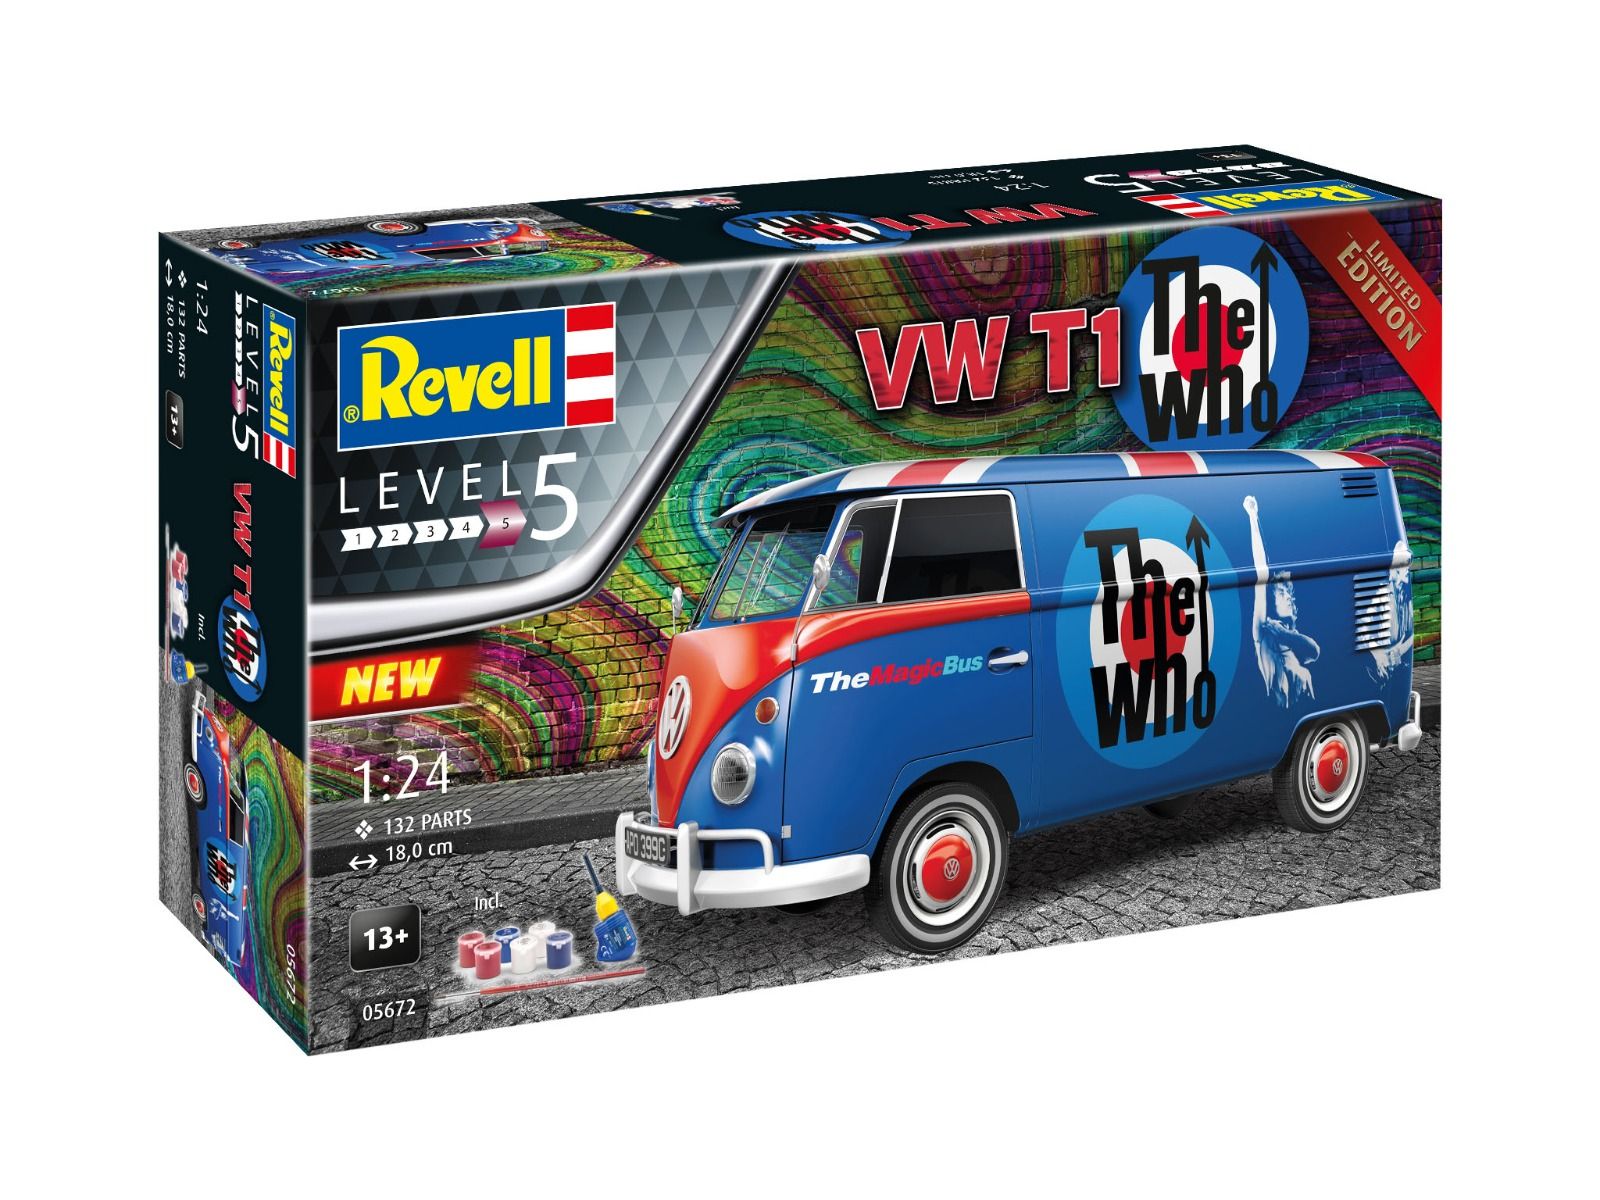 Revell 1/24 Scale The Who VW T1 Gift Set Model Kit